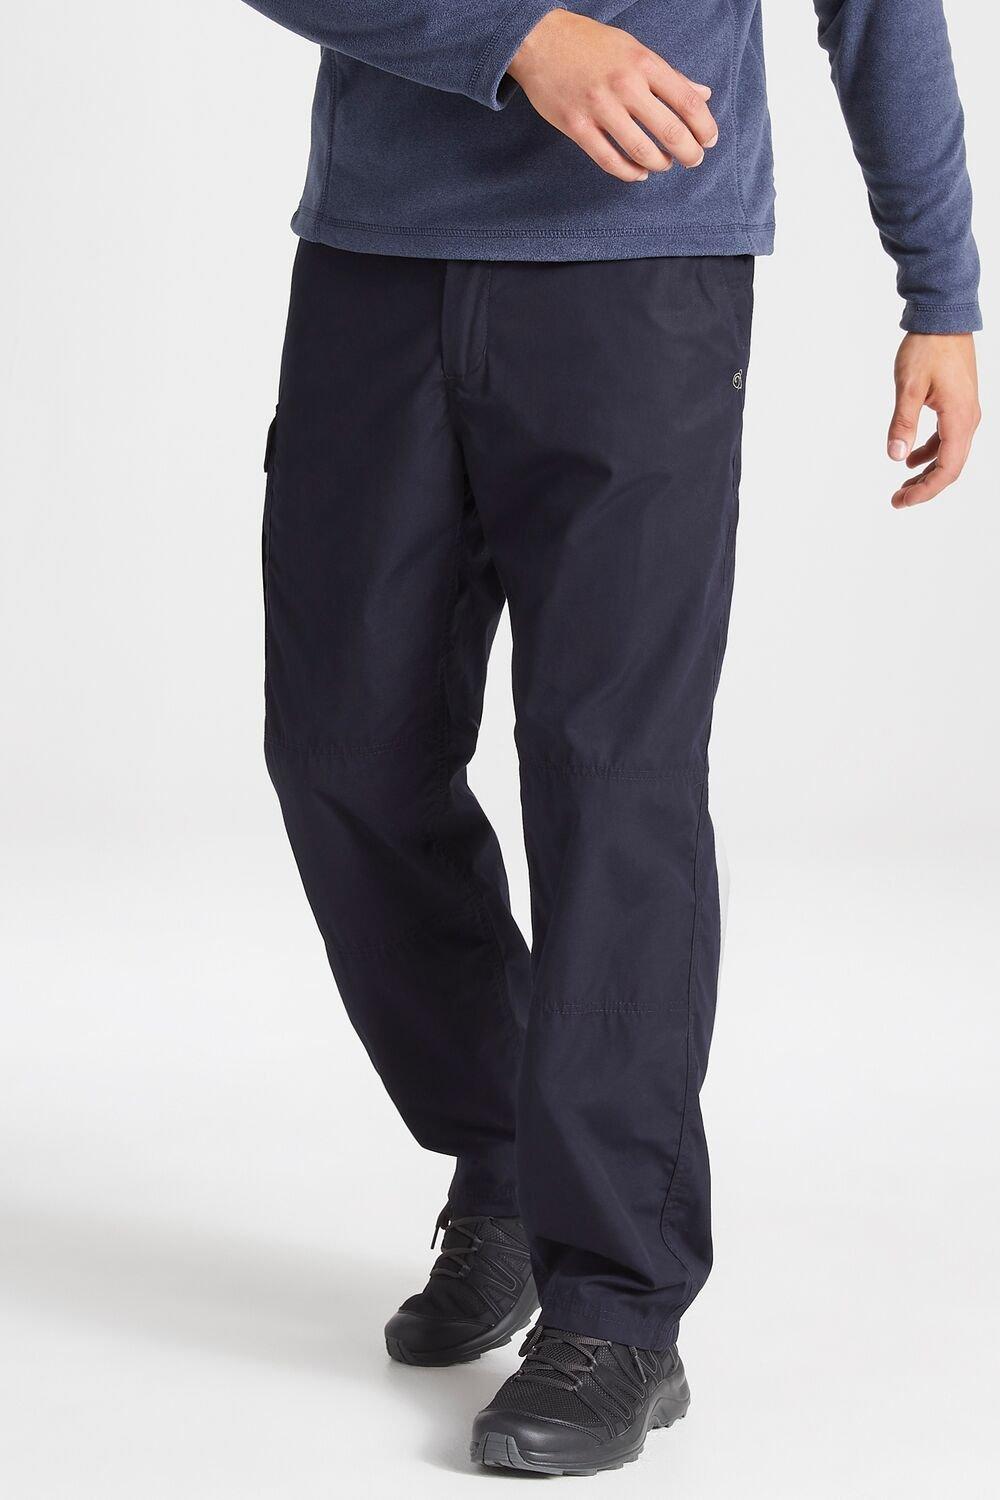 Craghoppers Expert Kiwi (Short) Mens Walking Trousers - Navy – Start Fitness